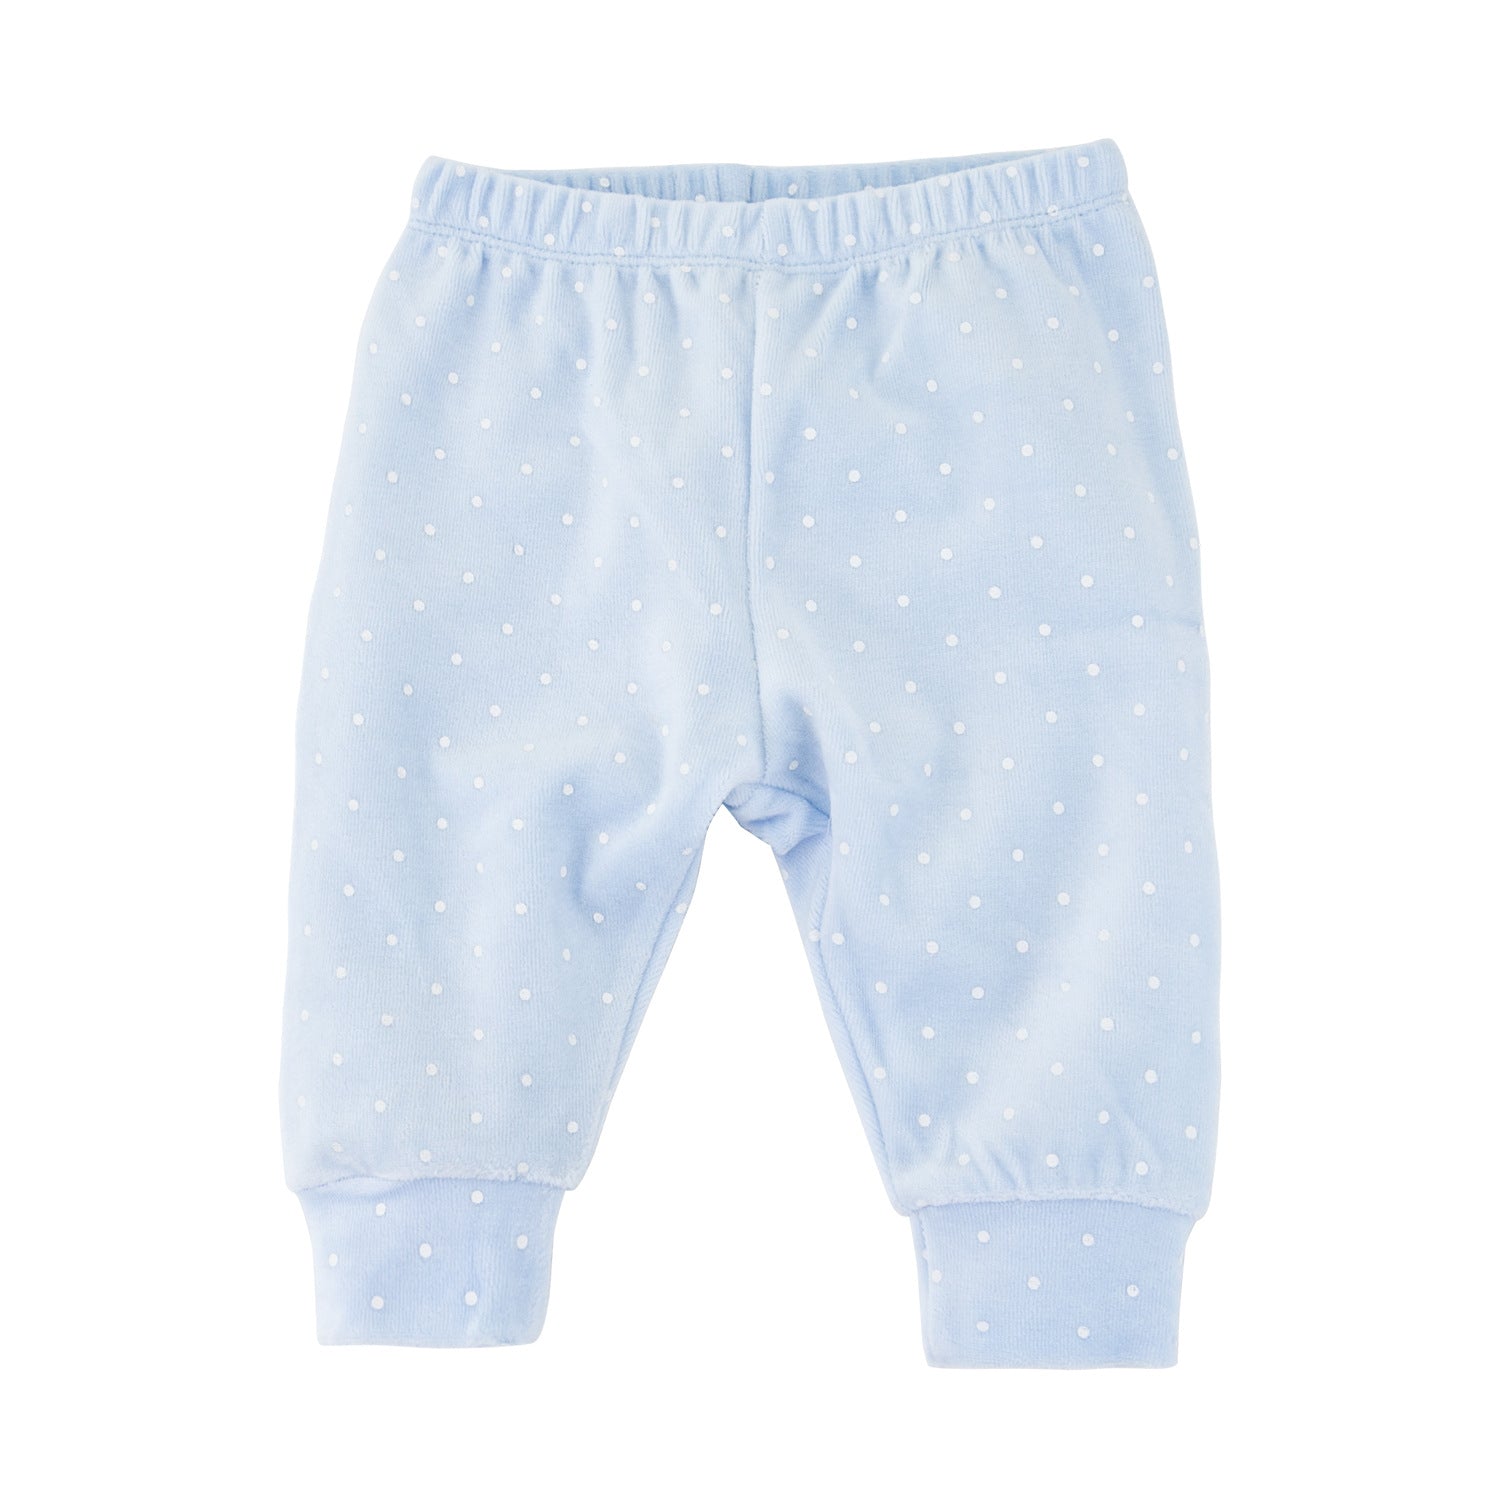 Solid-color warm pants for infants  infant pants Thecurvestory